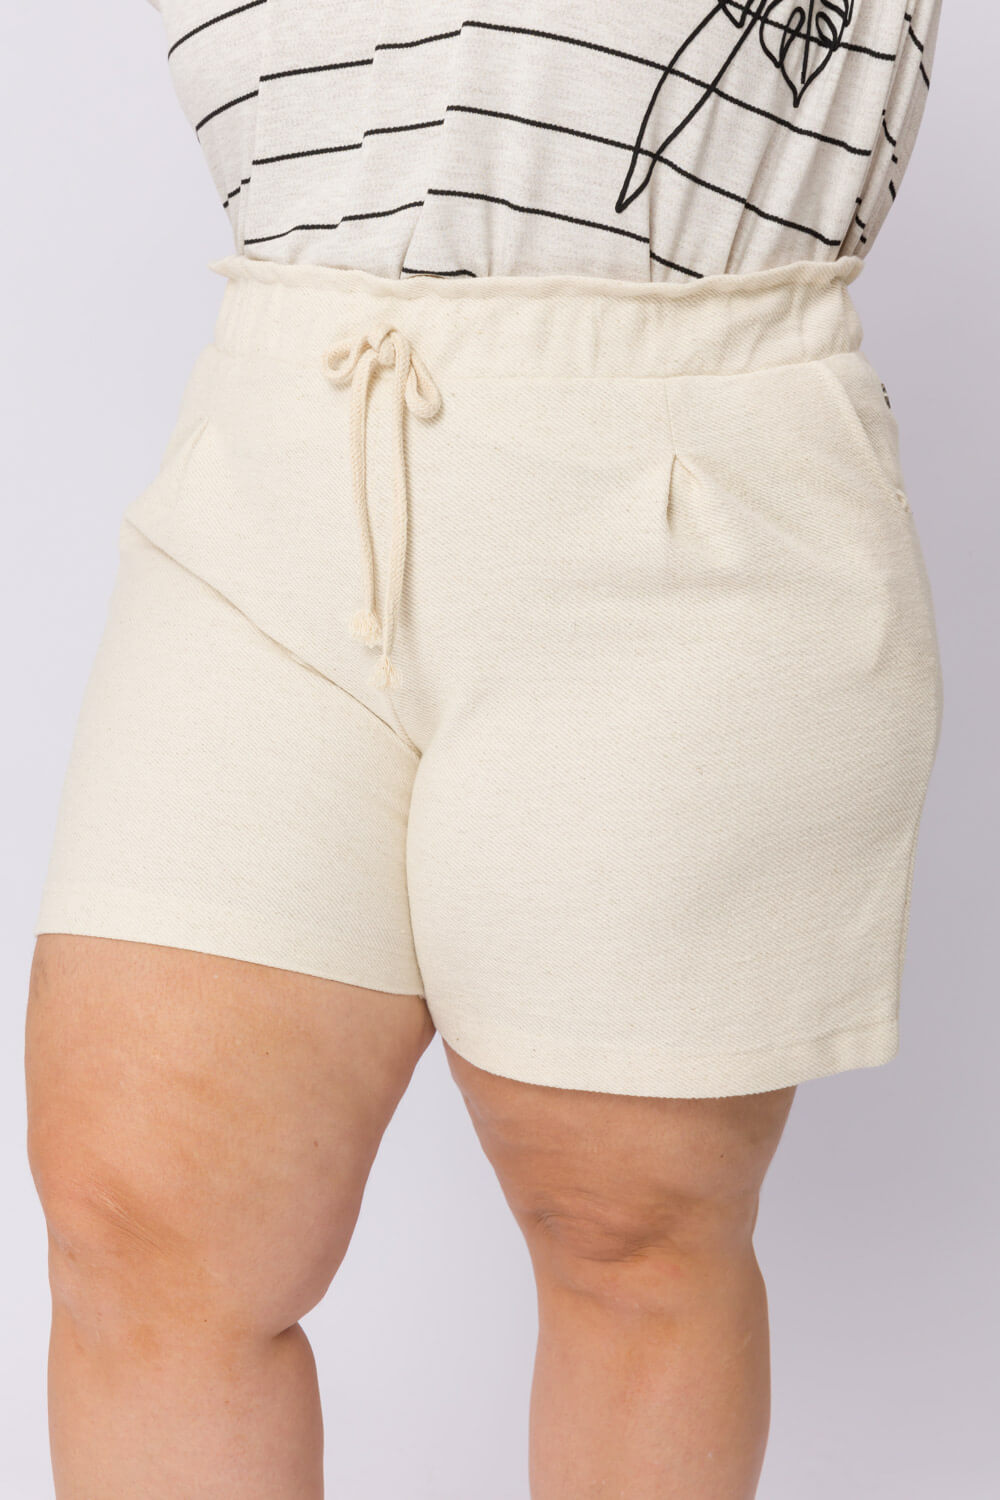 Shorts Feminino Plus Size Clochard Moletinho Cess